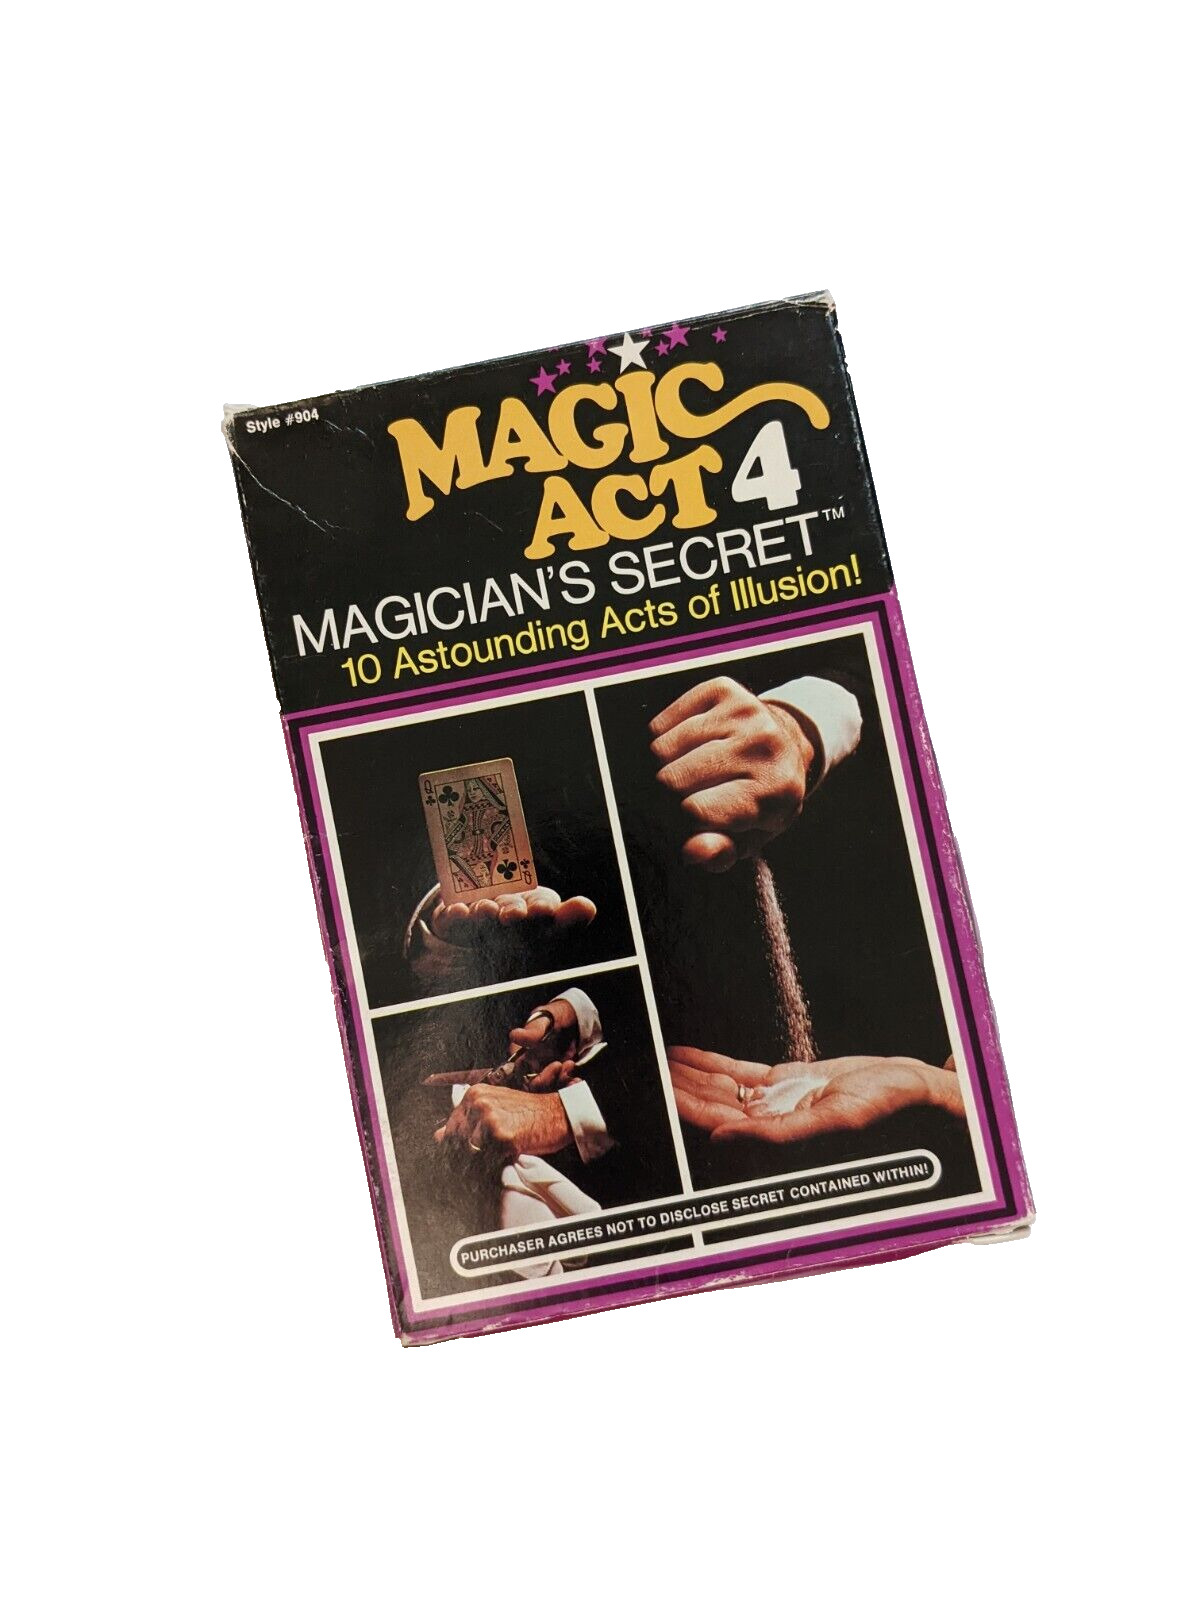 Vintage Reiss Magic Act 4 Magician\'s Secret 1975 INCOMEPLETE READ Magic Tricks